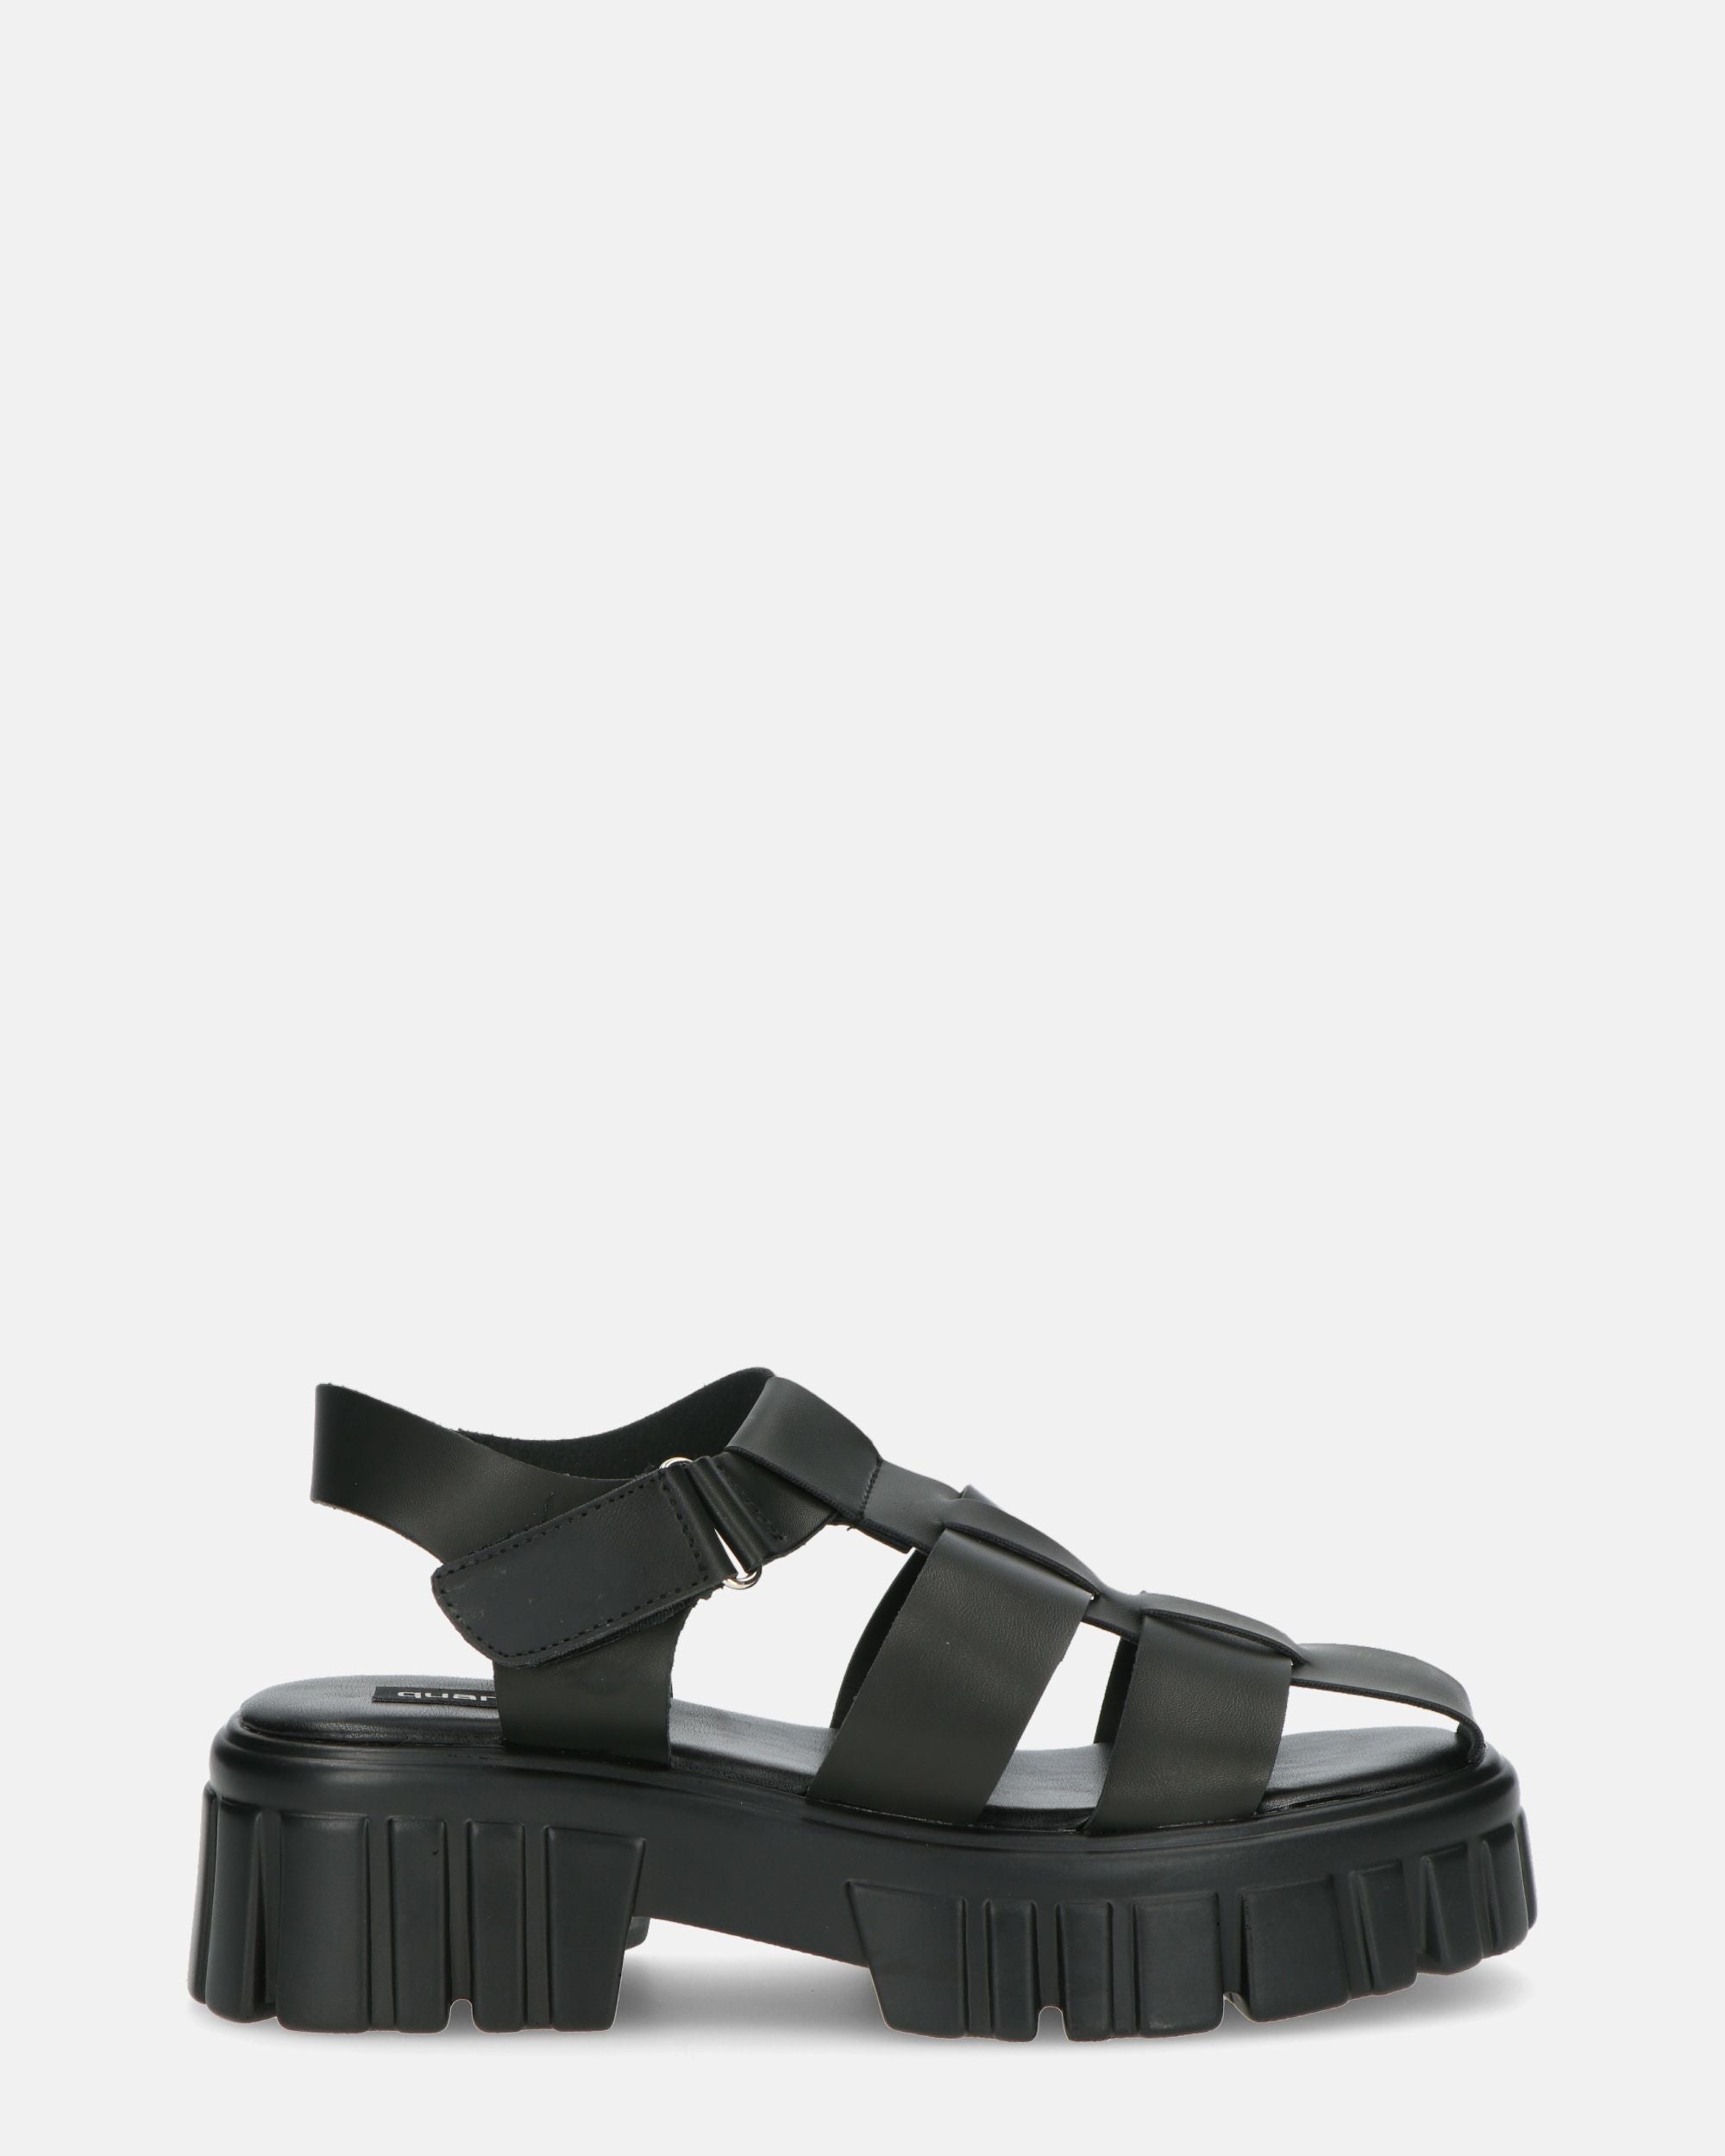 MACKENZIE - platform sandals with black eco-leather straps